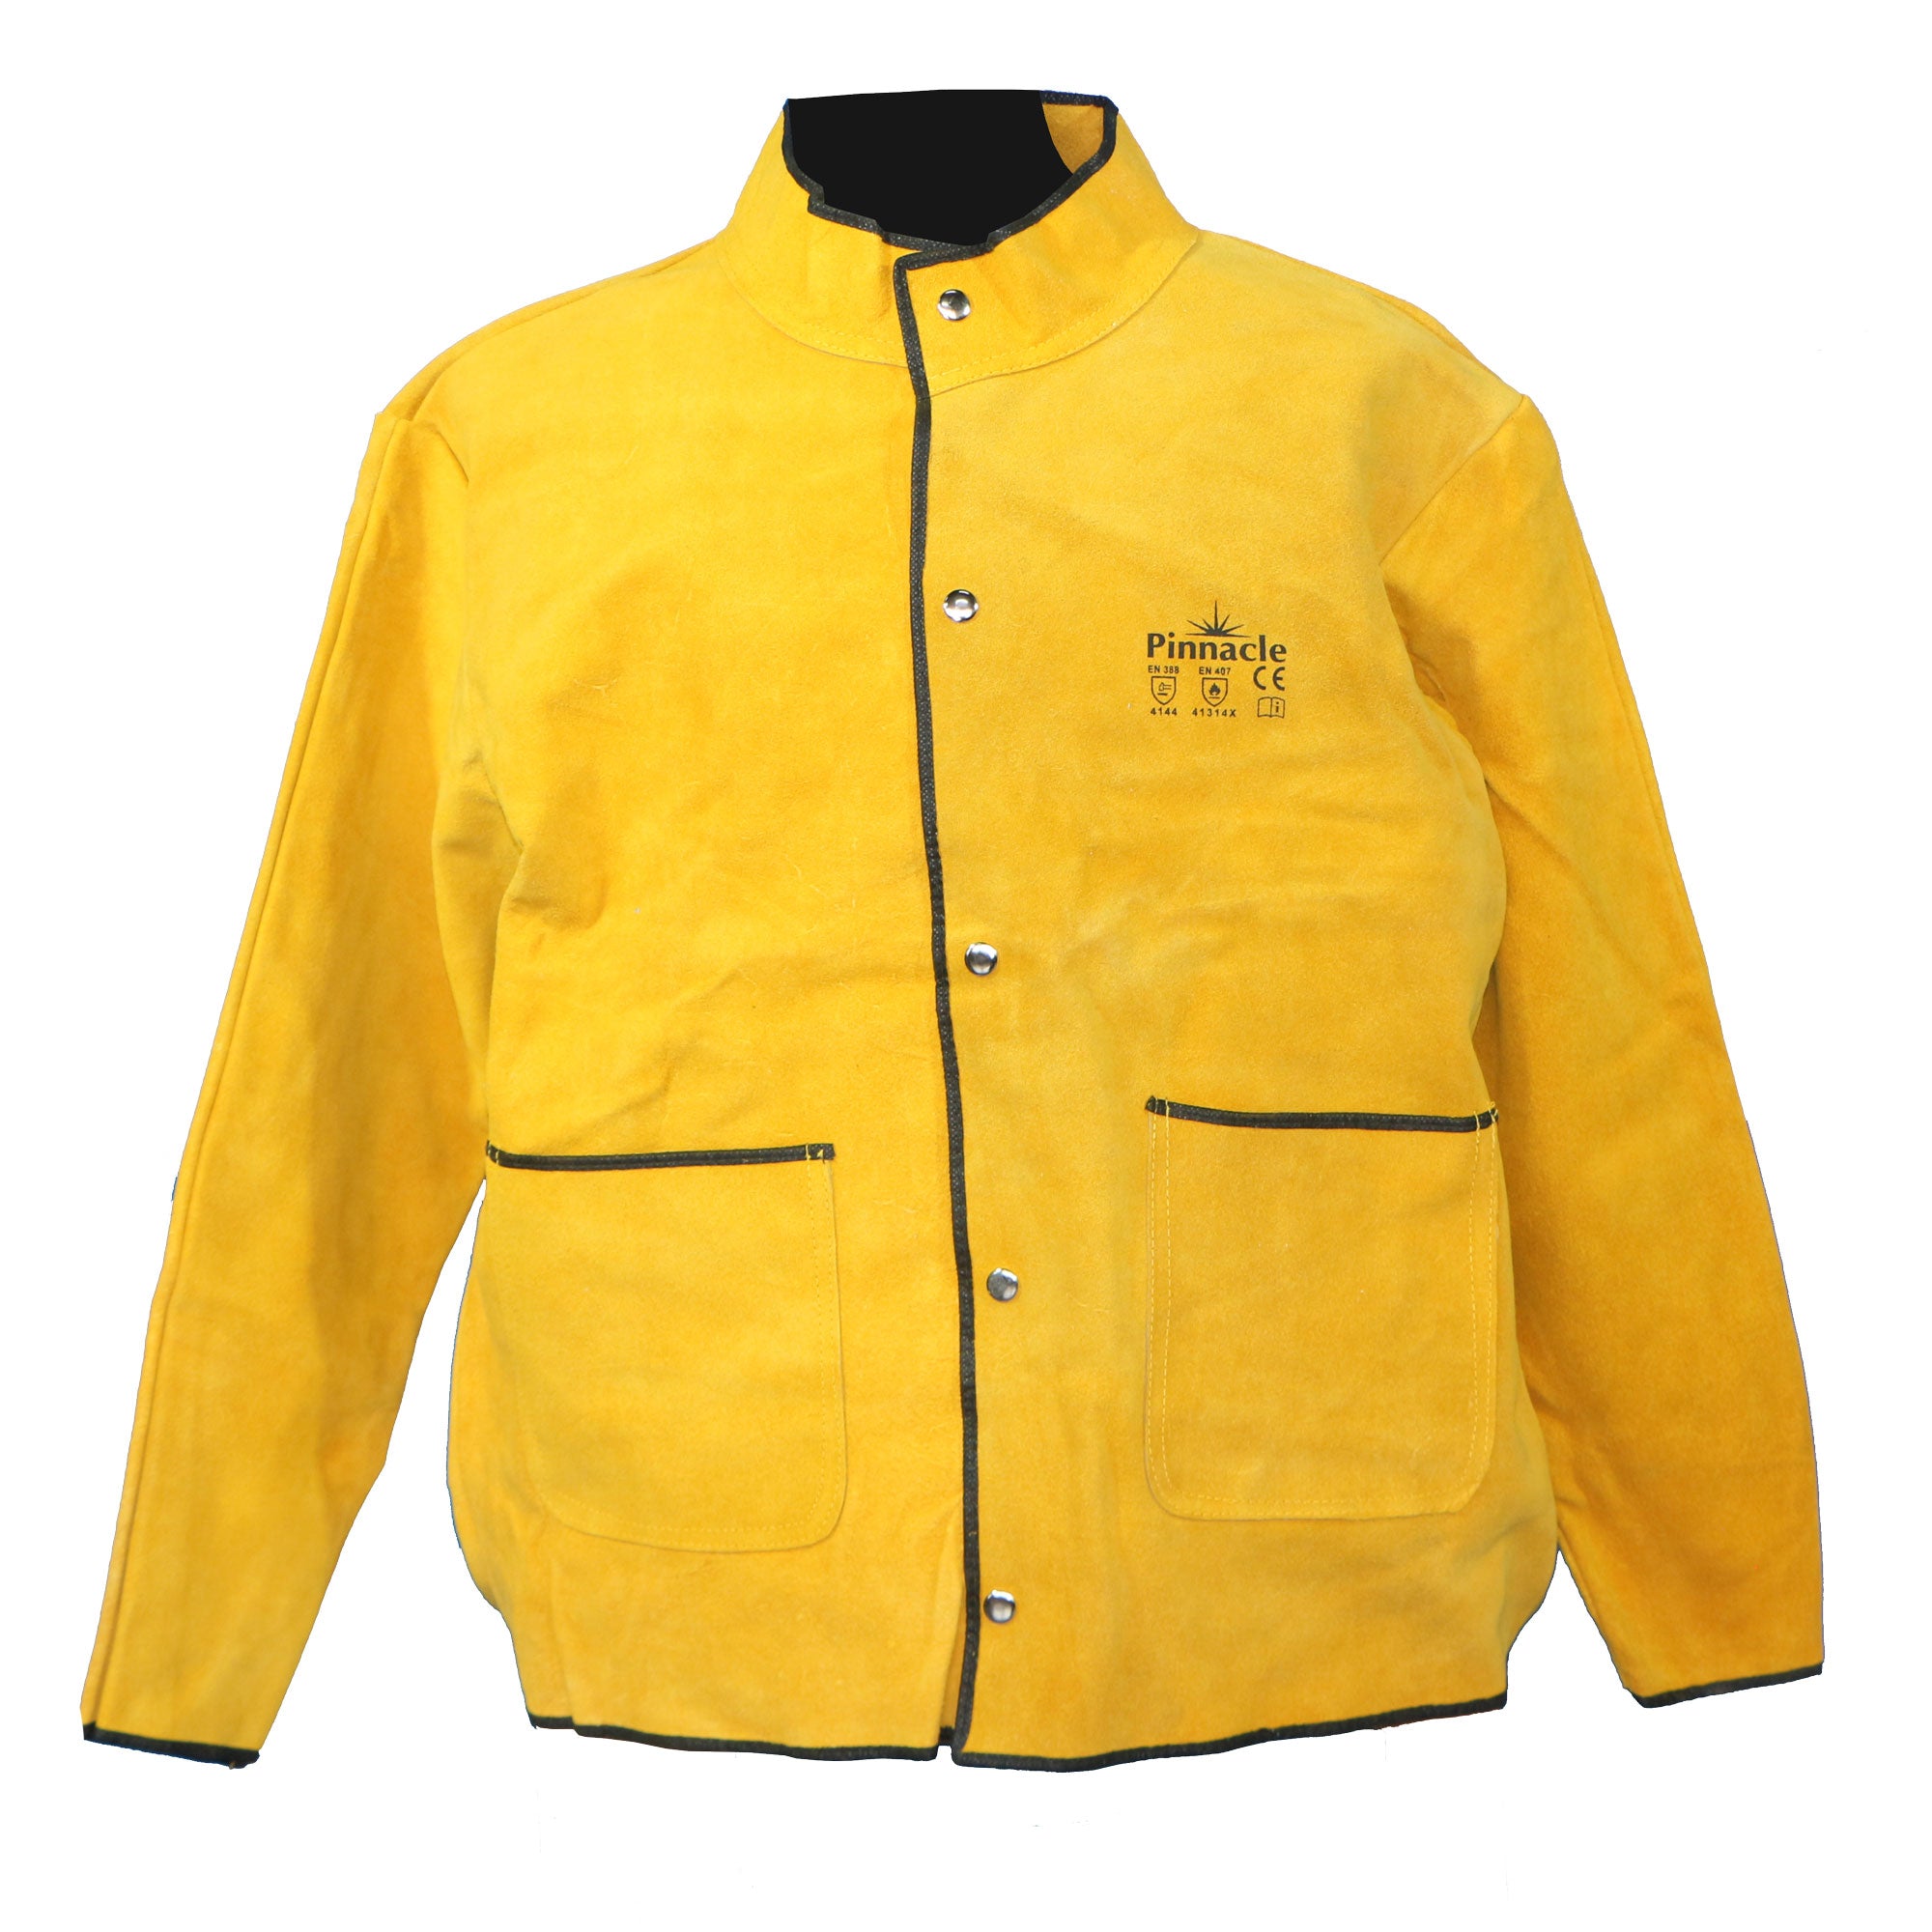 Pinnacle Yellow Suede Leather Welding Jacket